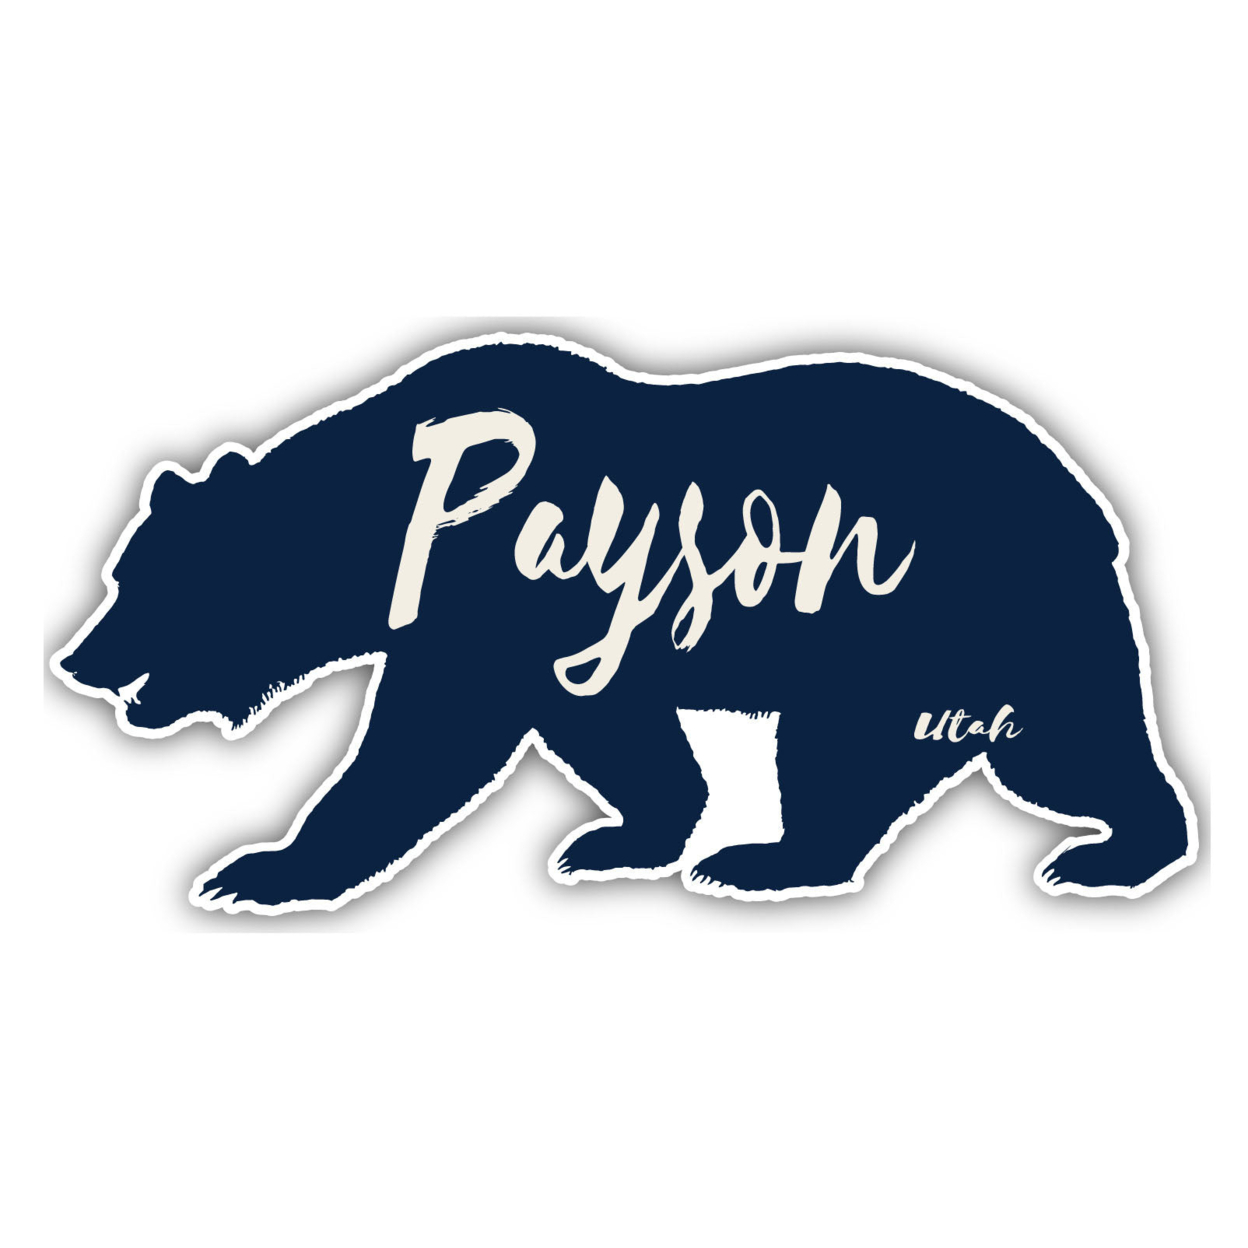 Payson Utah Souvenir Decorative Stickers (Choose Theme And Size) - Single Unit, 2-Inch, Bear